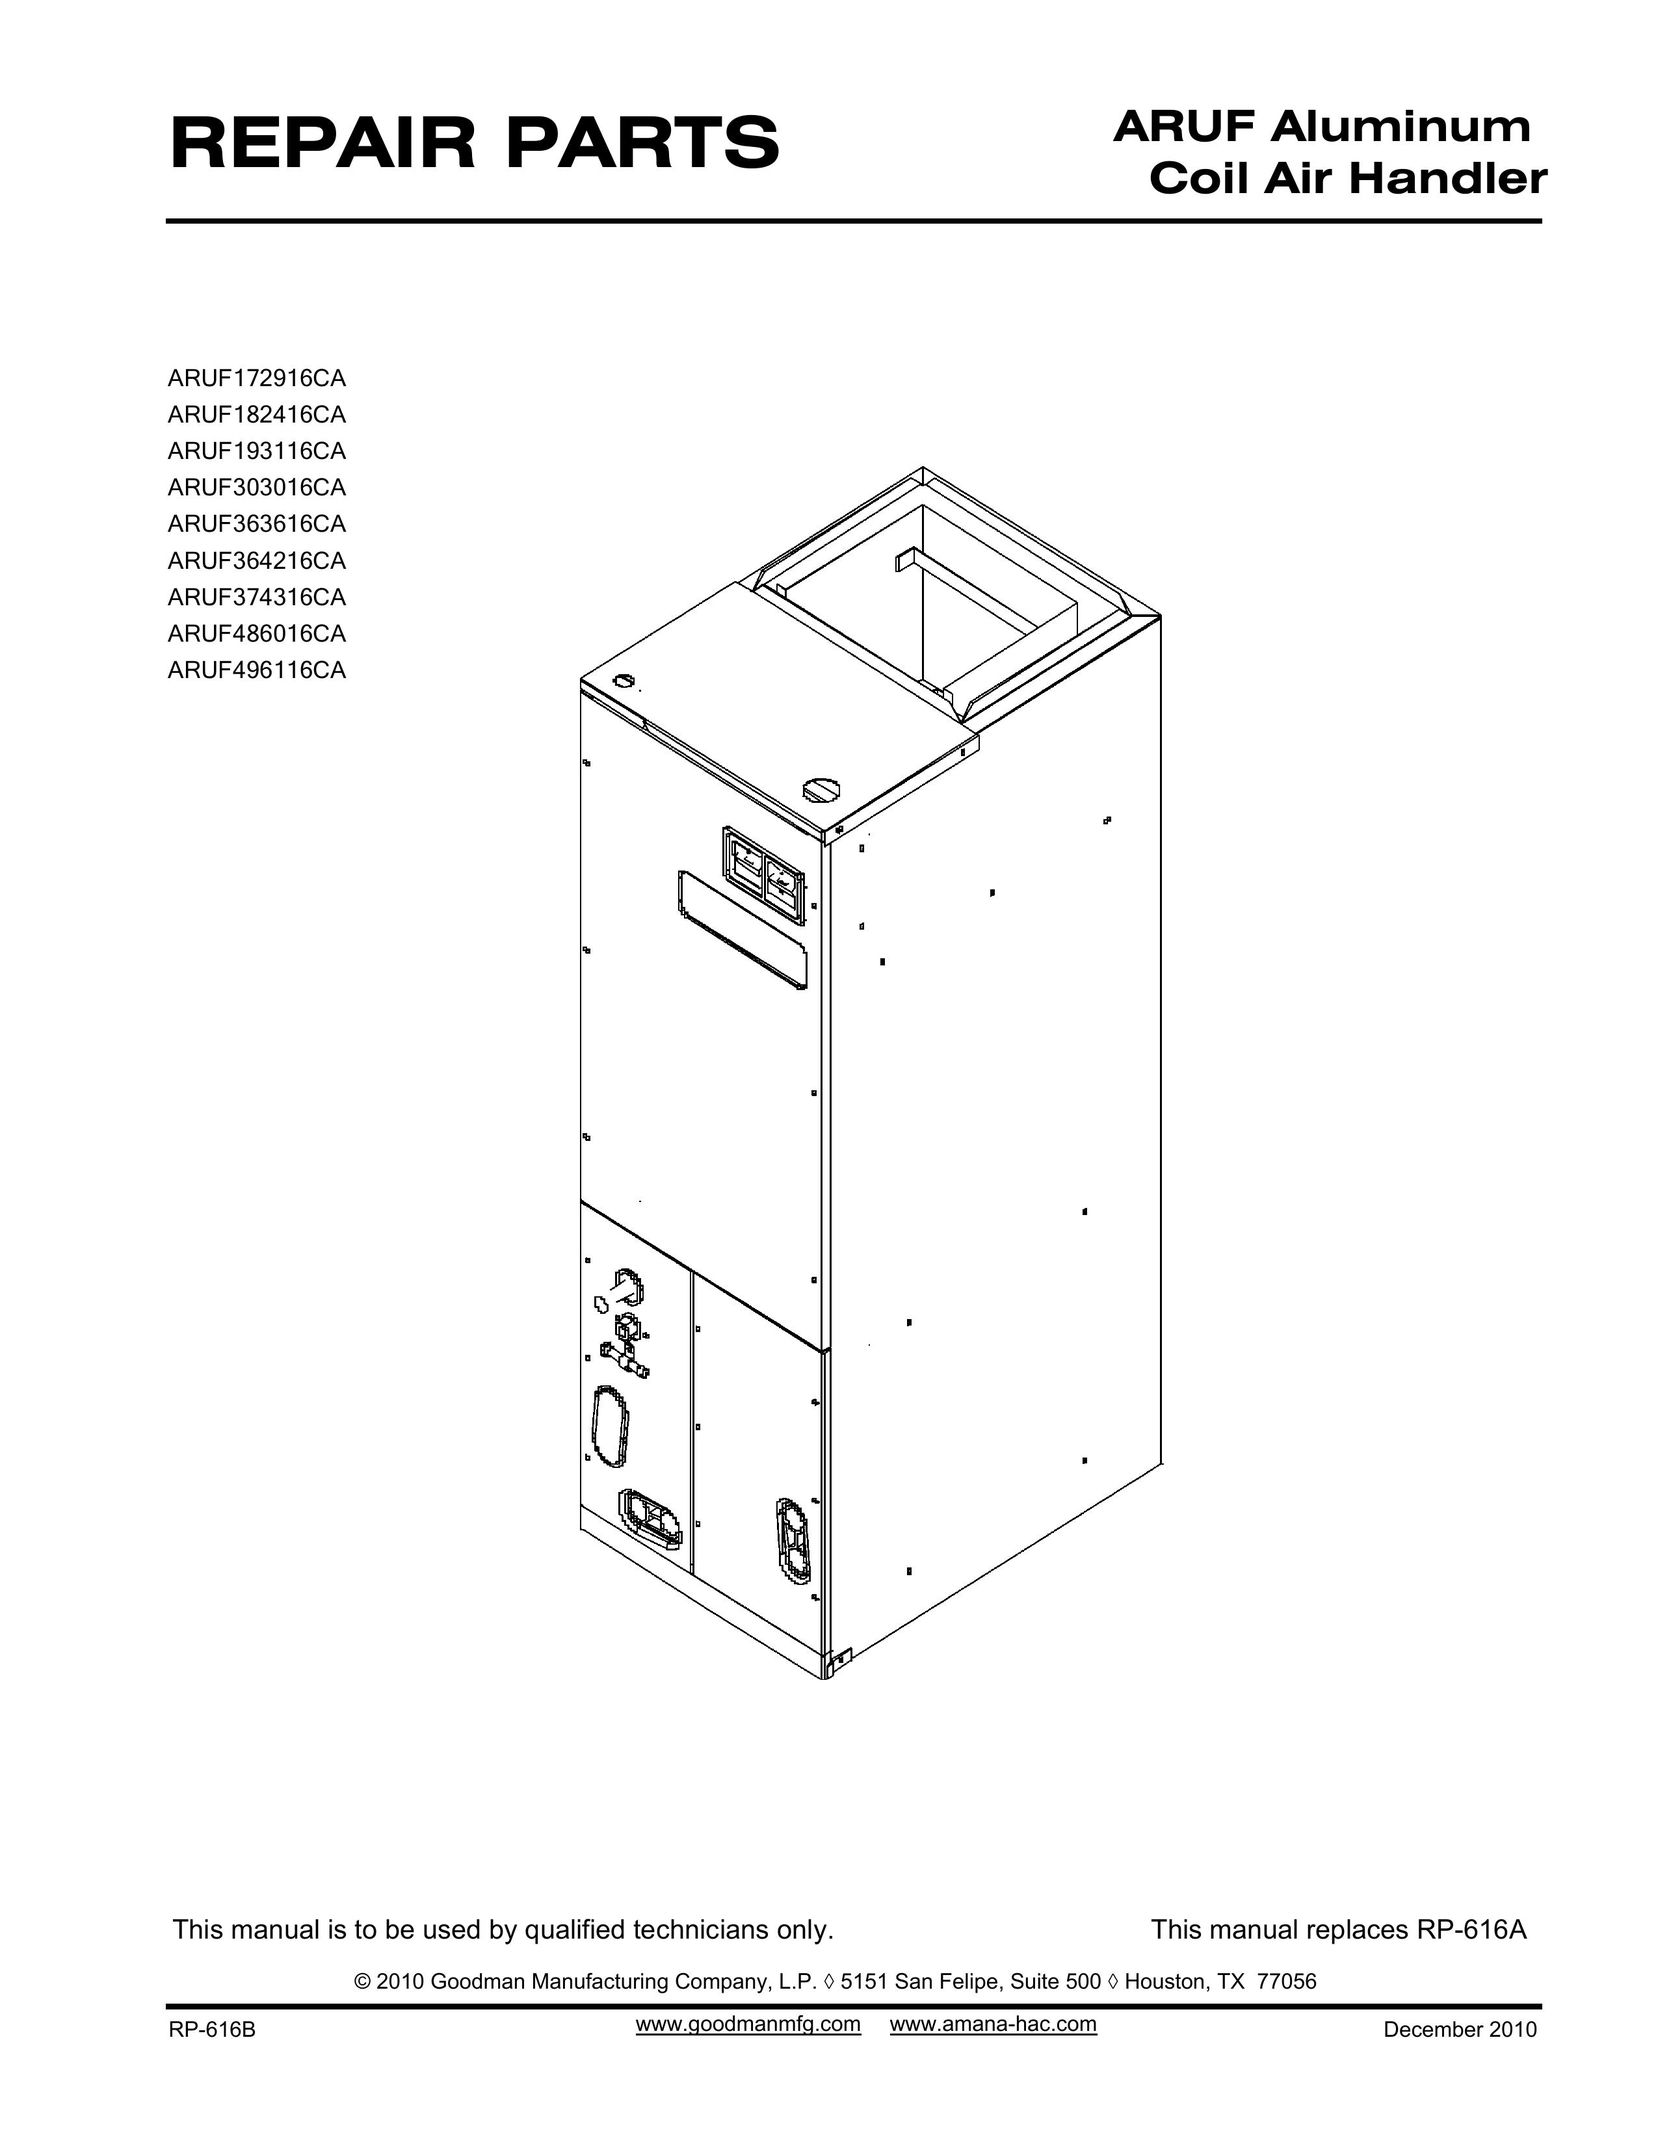 Goodman Mfg ARUF496116CA Air Conditioner User Manual